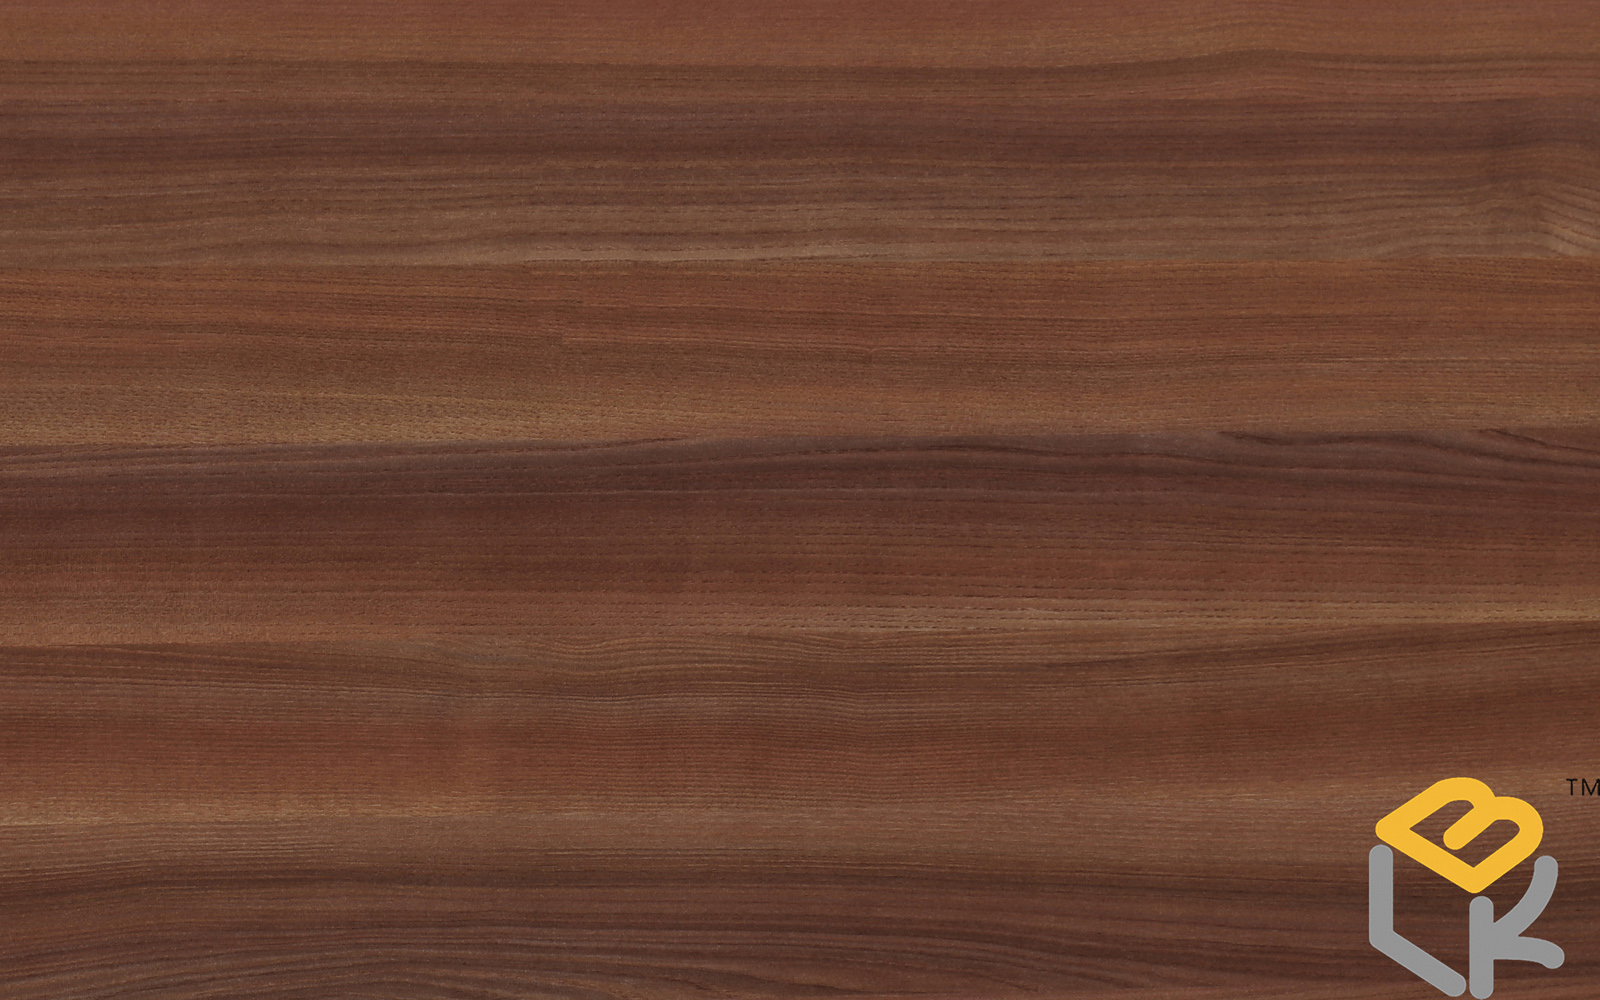 BLK woodgrain melamine faced plywood